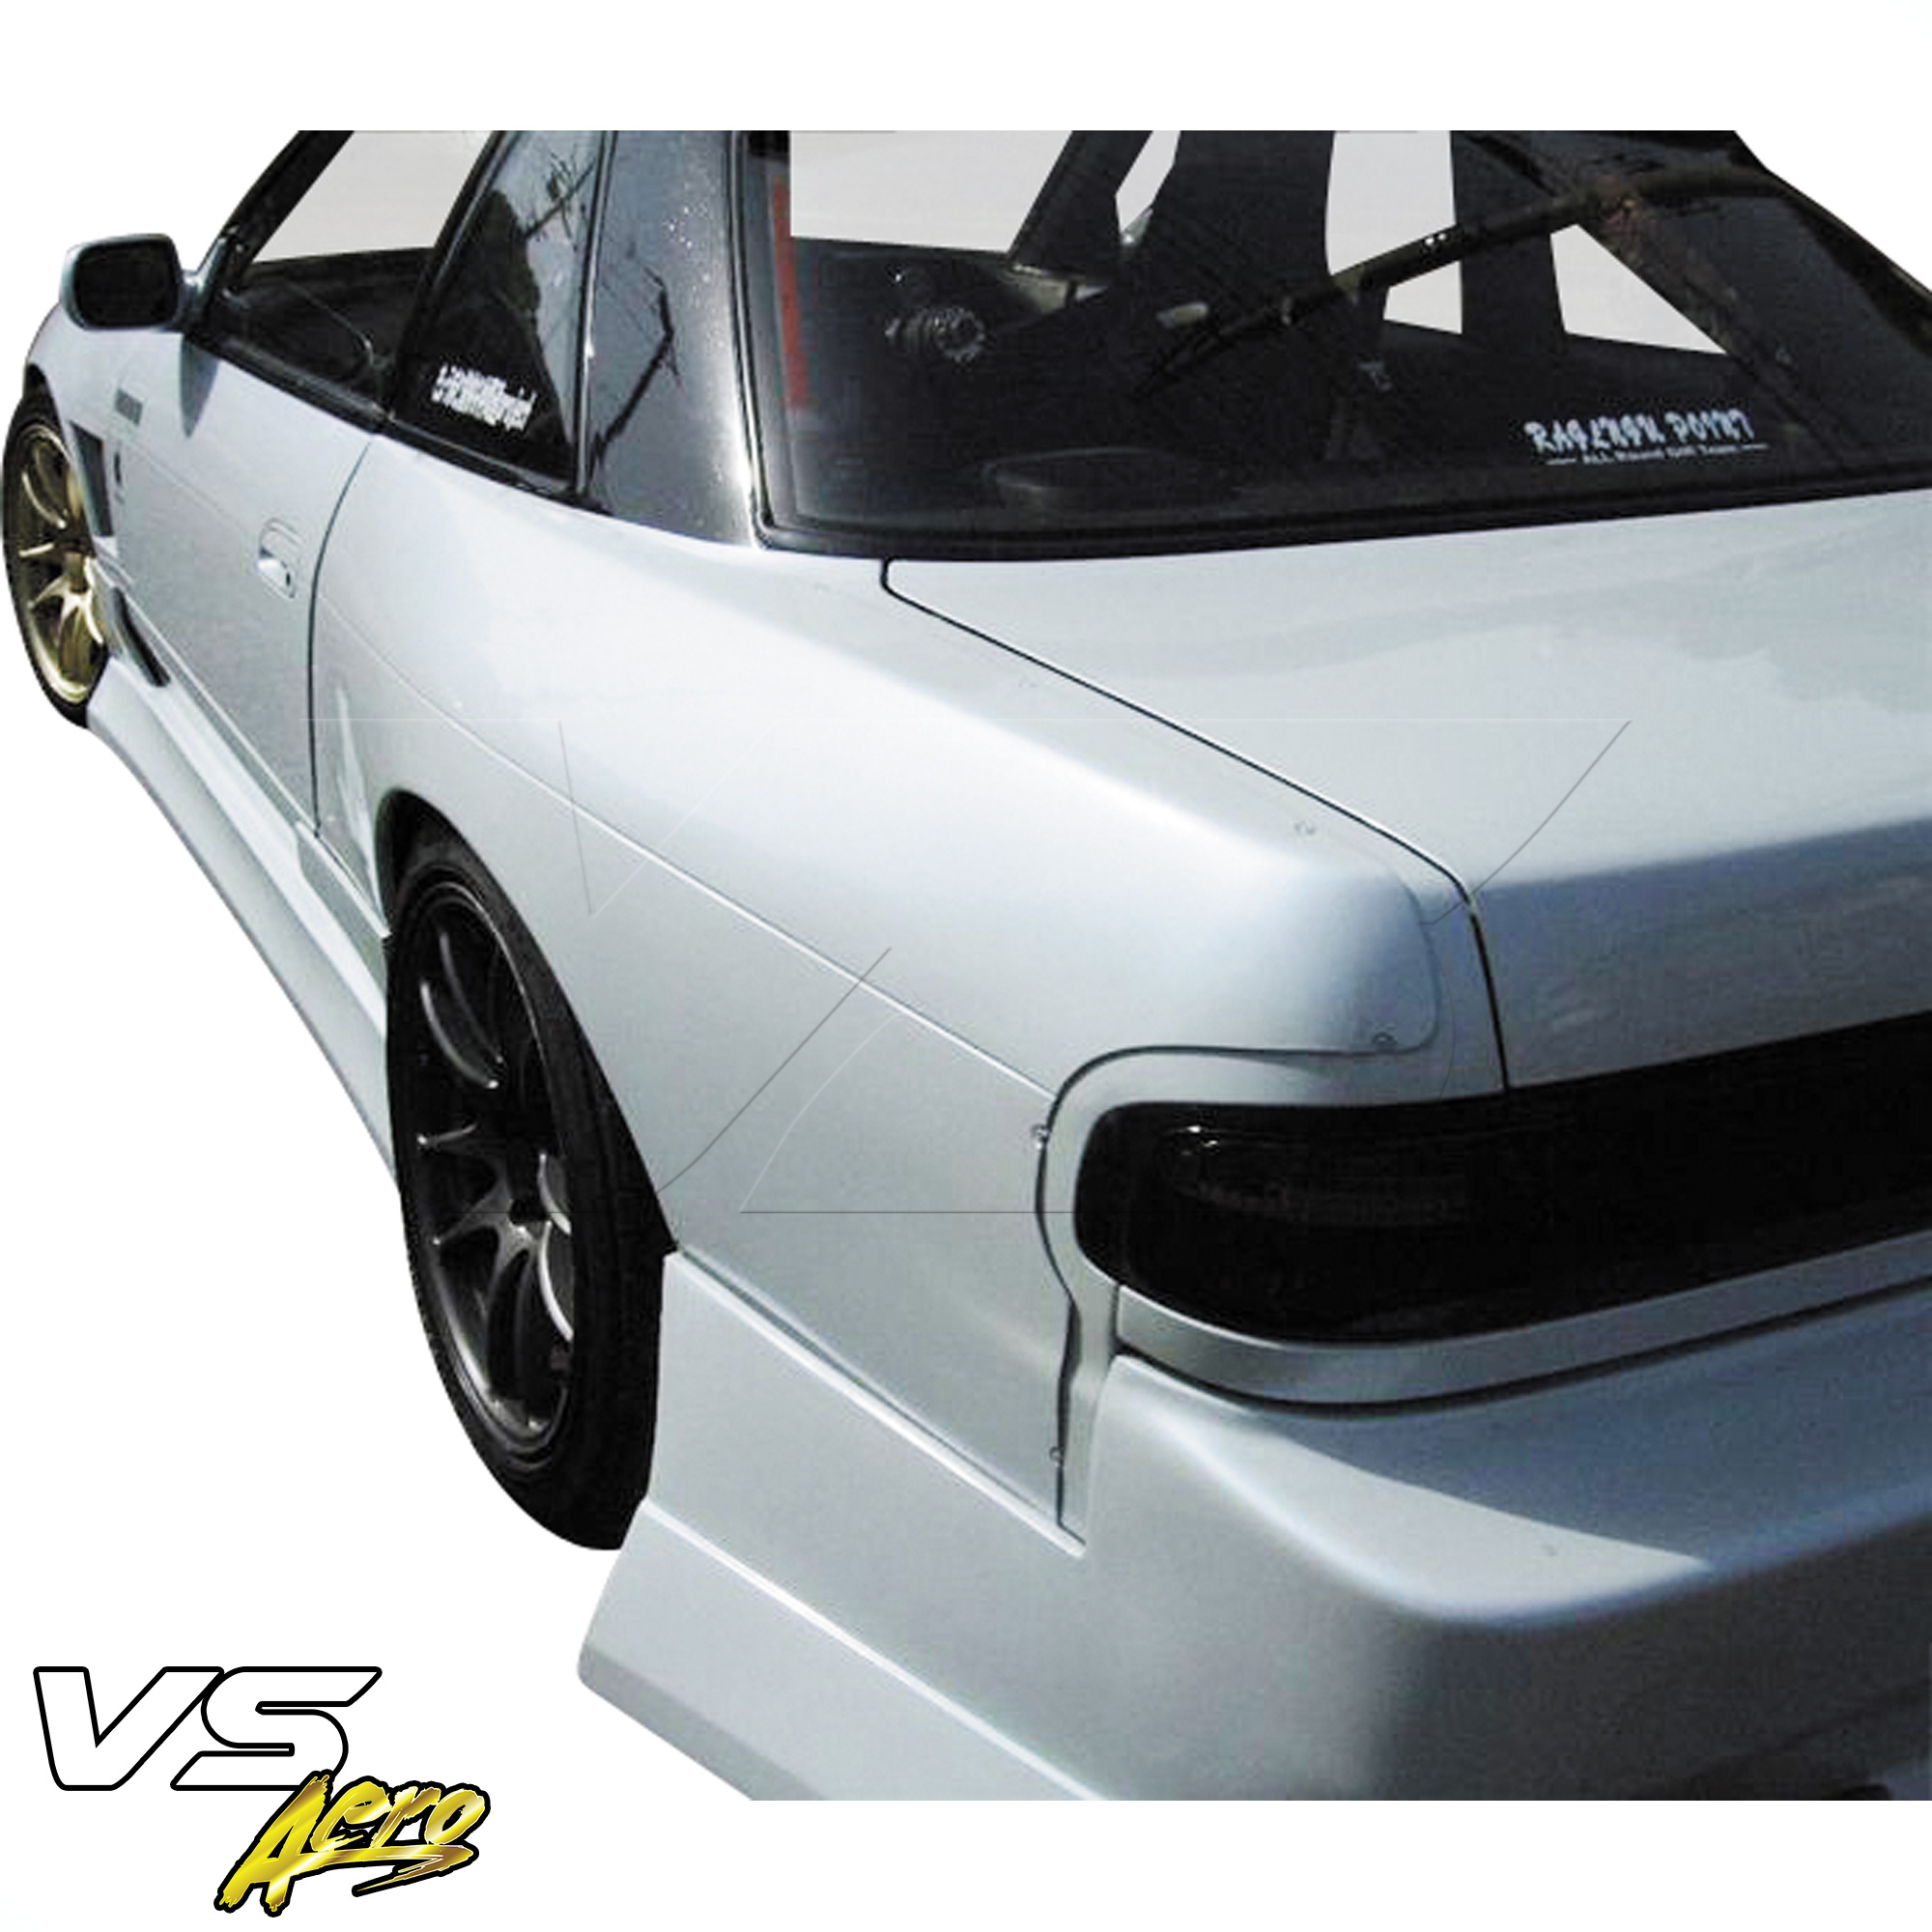 VSaero FRP MSPO Wide Body 50mm Fenders (rear) w Gas Cap > Nissan 240SX S13 1989-1994 > 2dr Coupe - Image 3